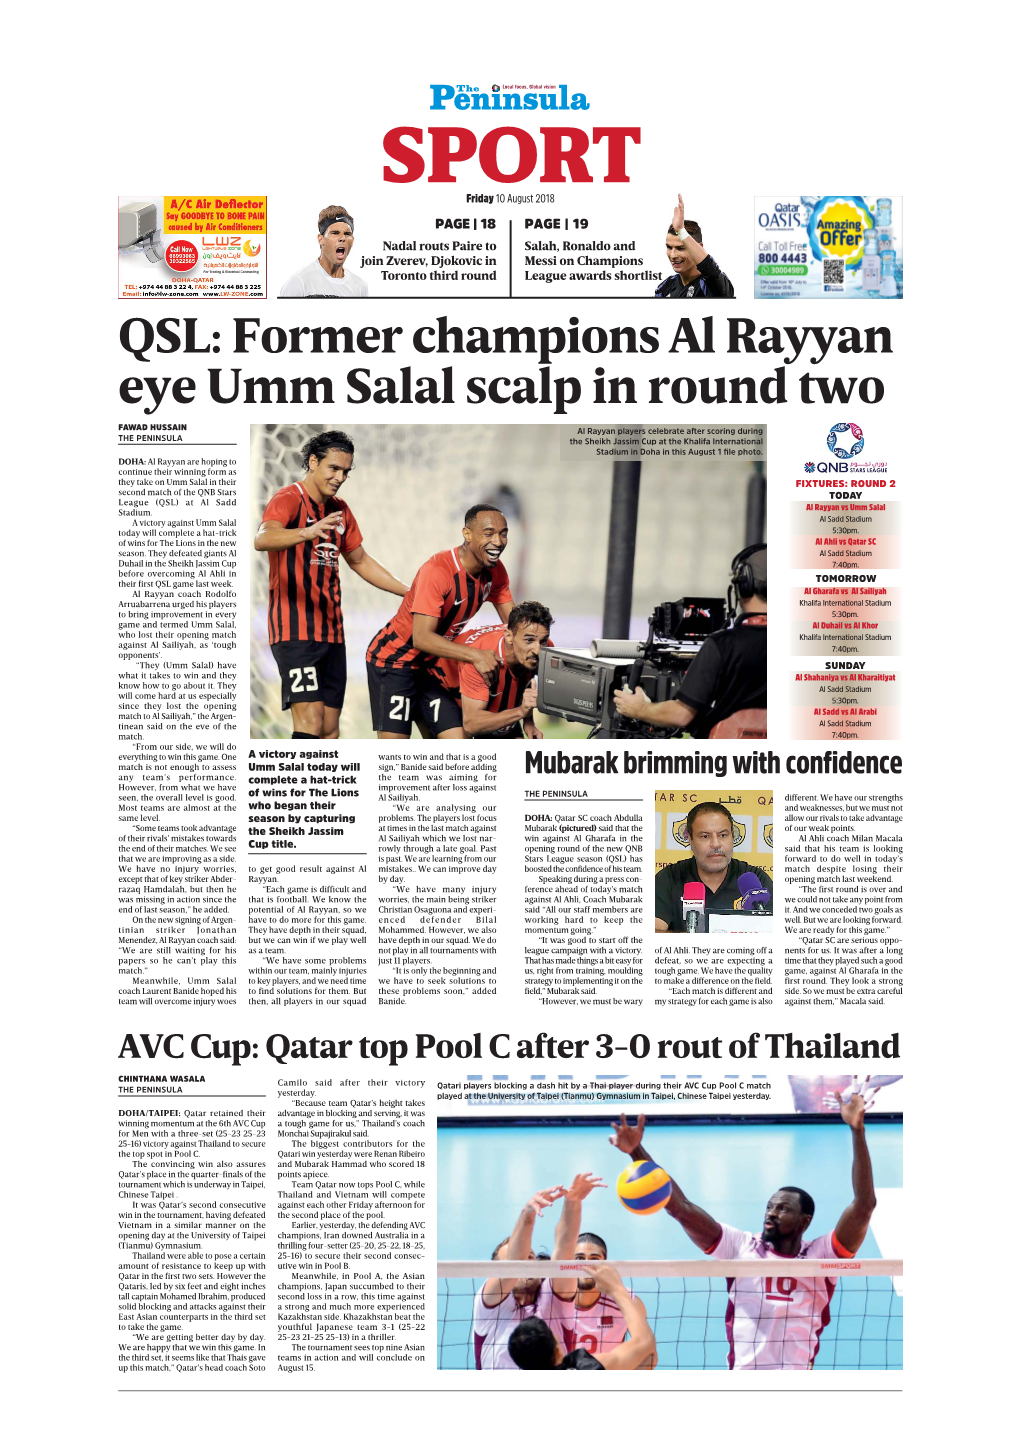 QSL: Former Champions Al Rayyan Eye Umm Salal Scalp in Round Two